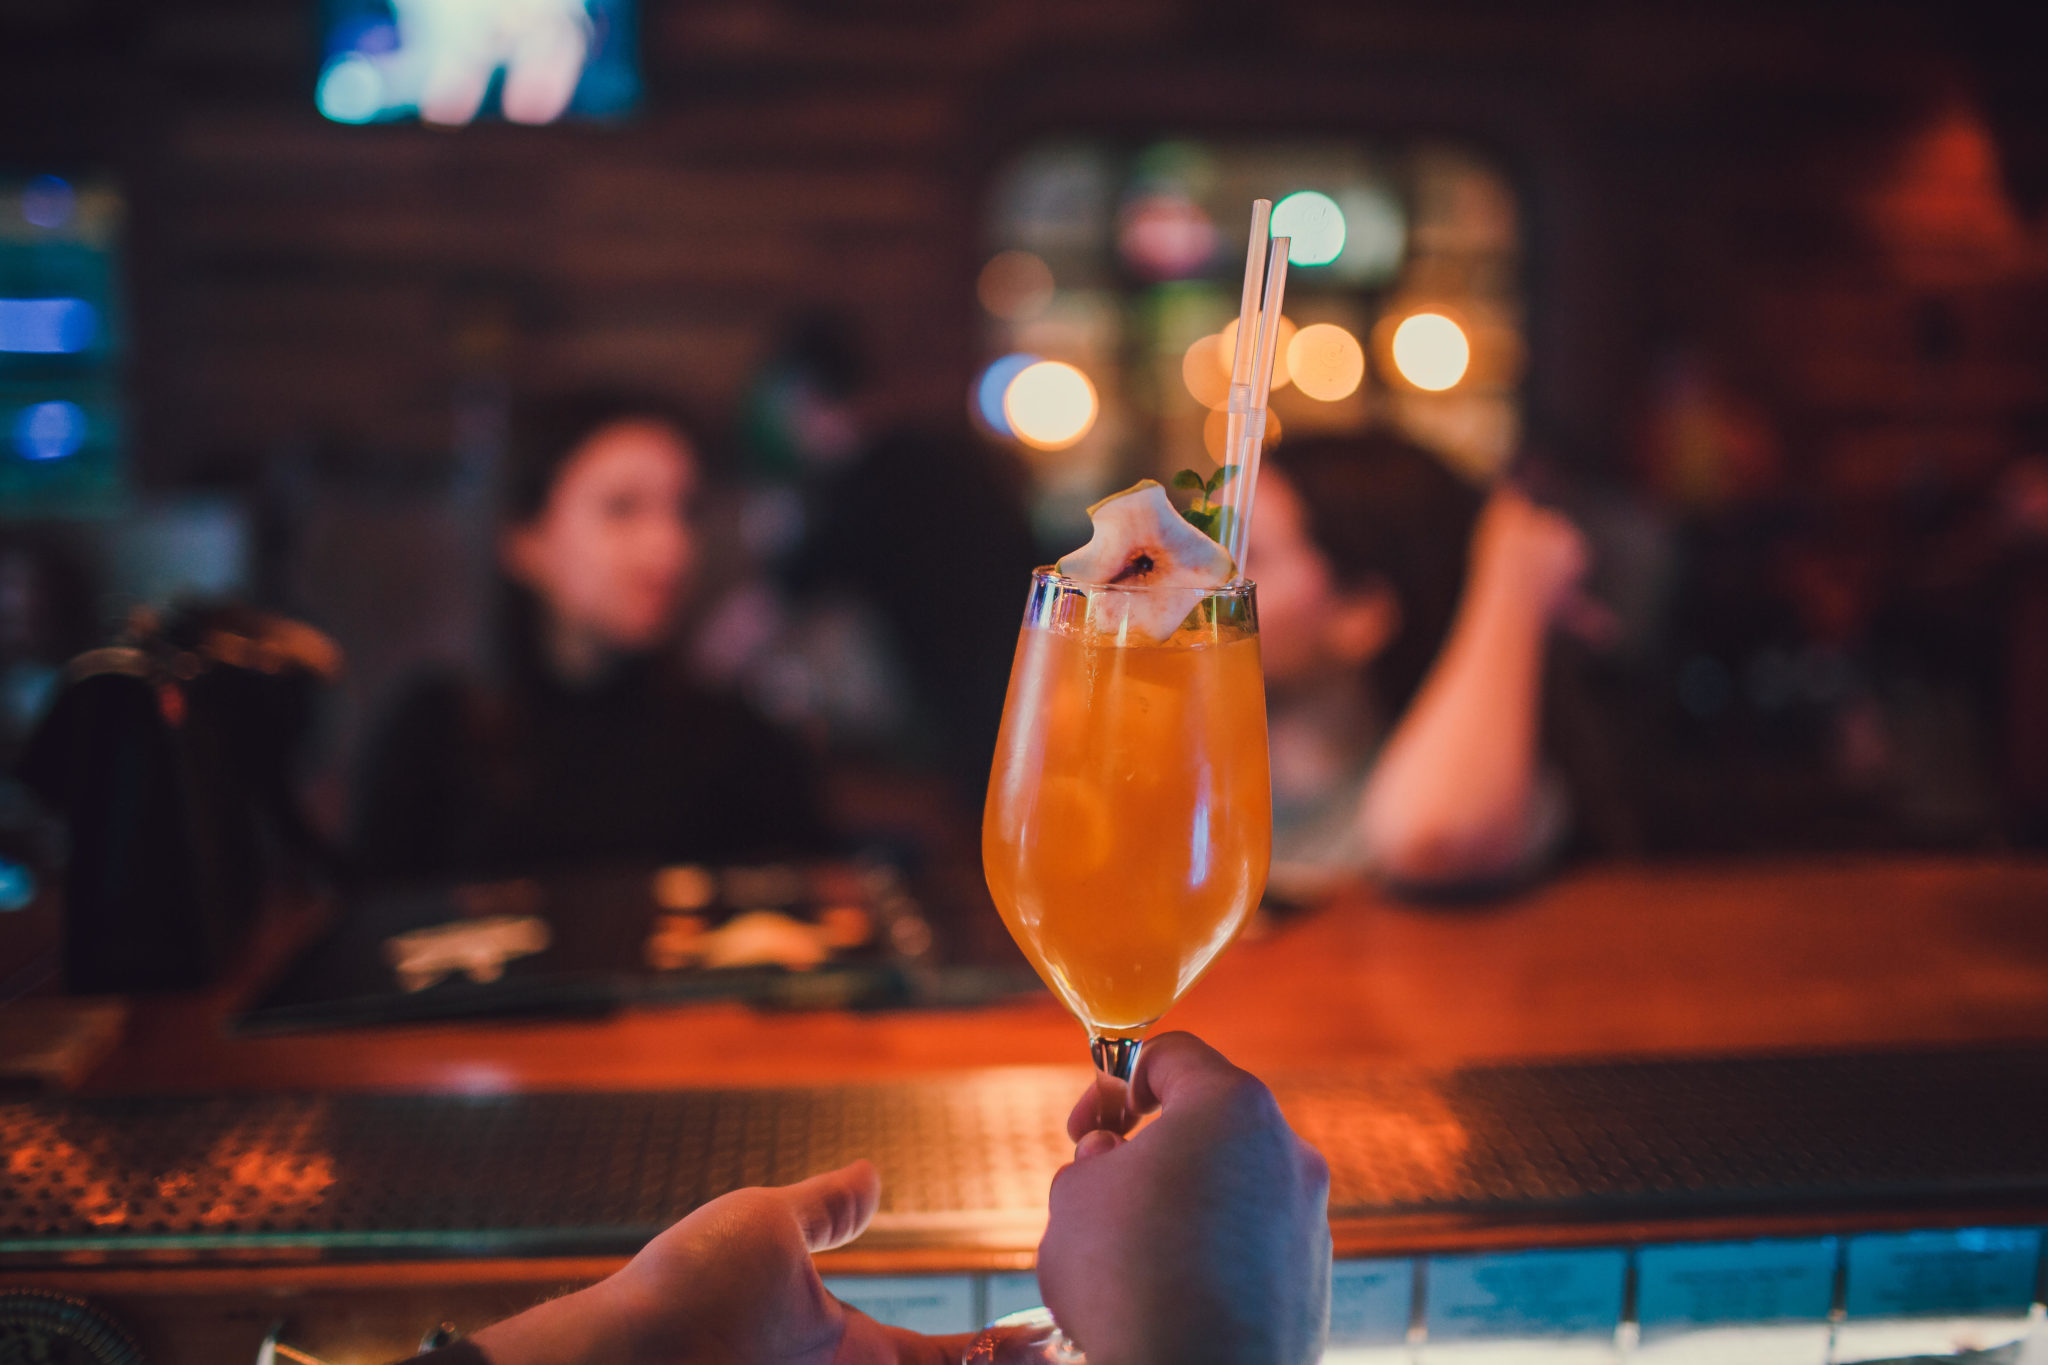 A barman gives a non-alcoholic cocktail across a hotel bar in November 2018